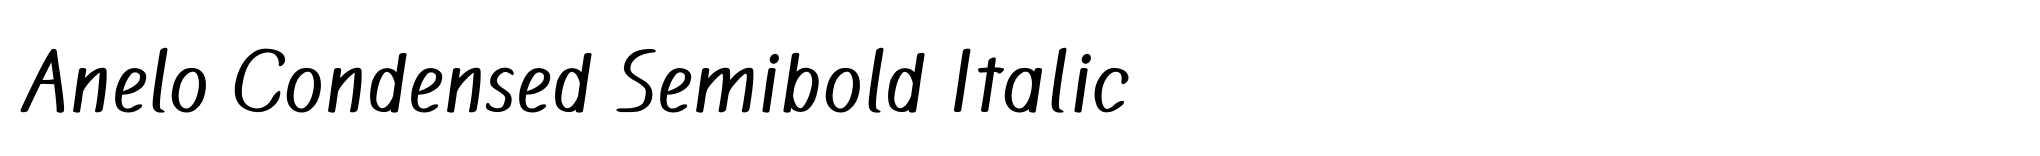 Anelo Condensed Semibold Italic image